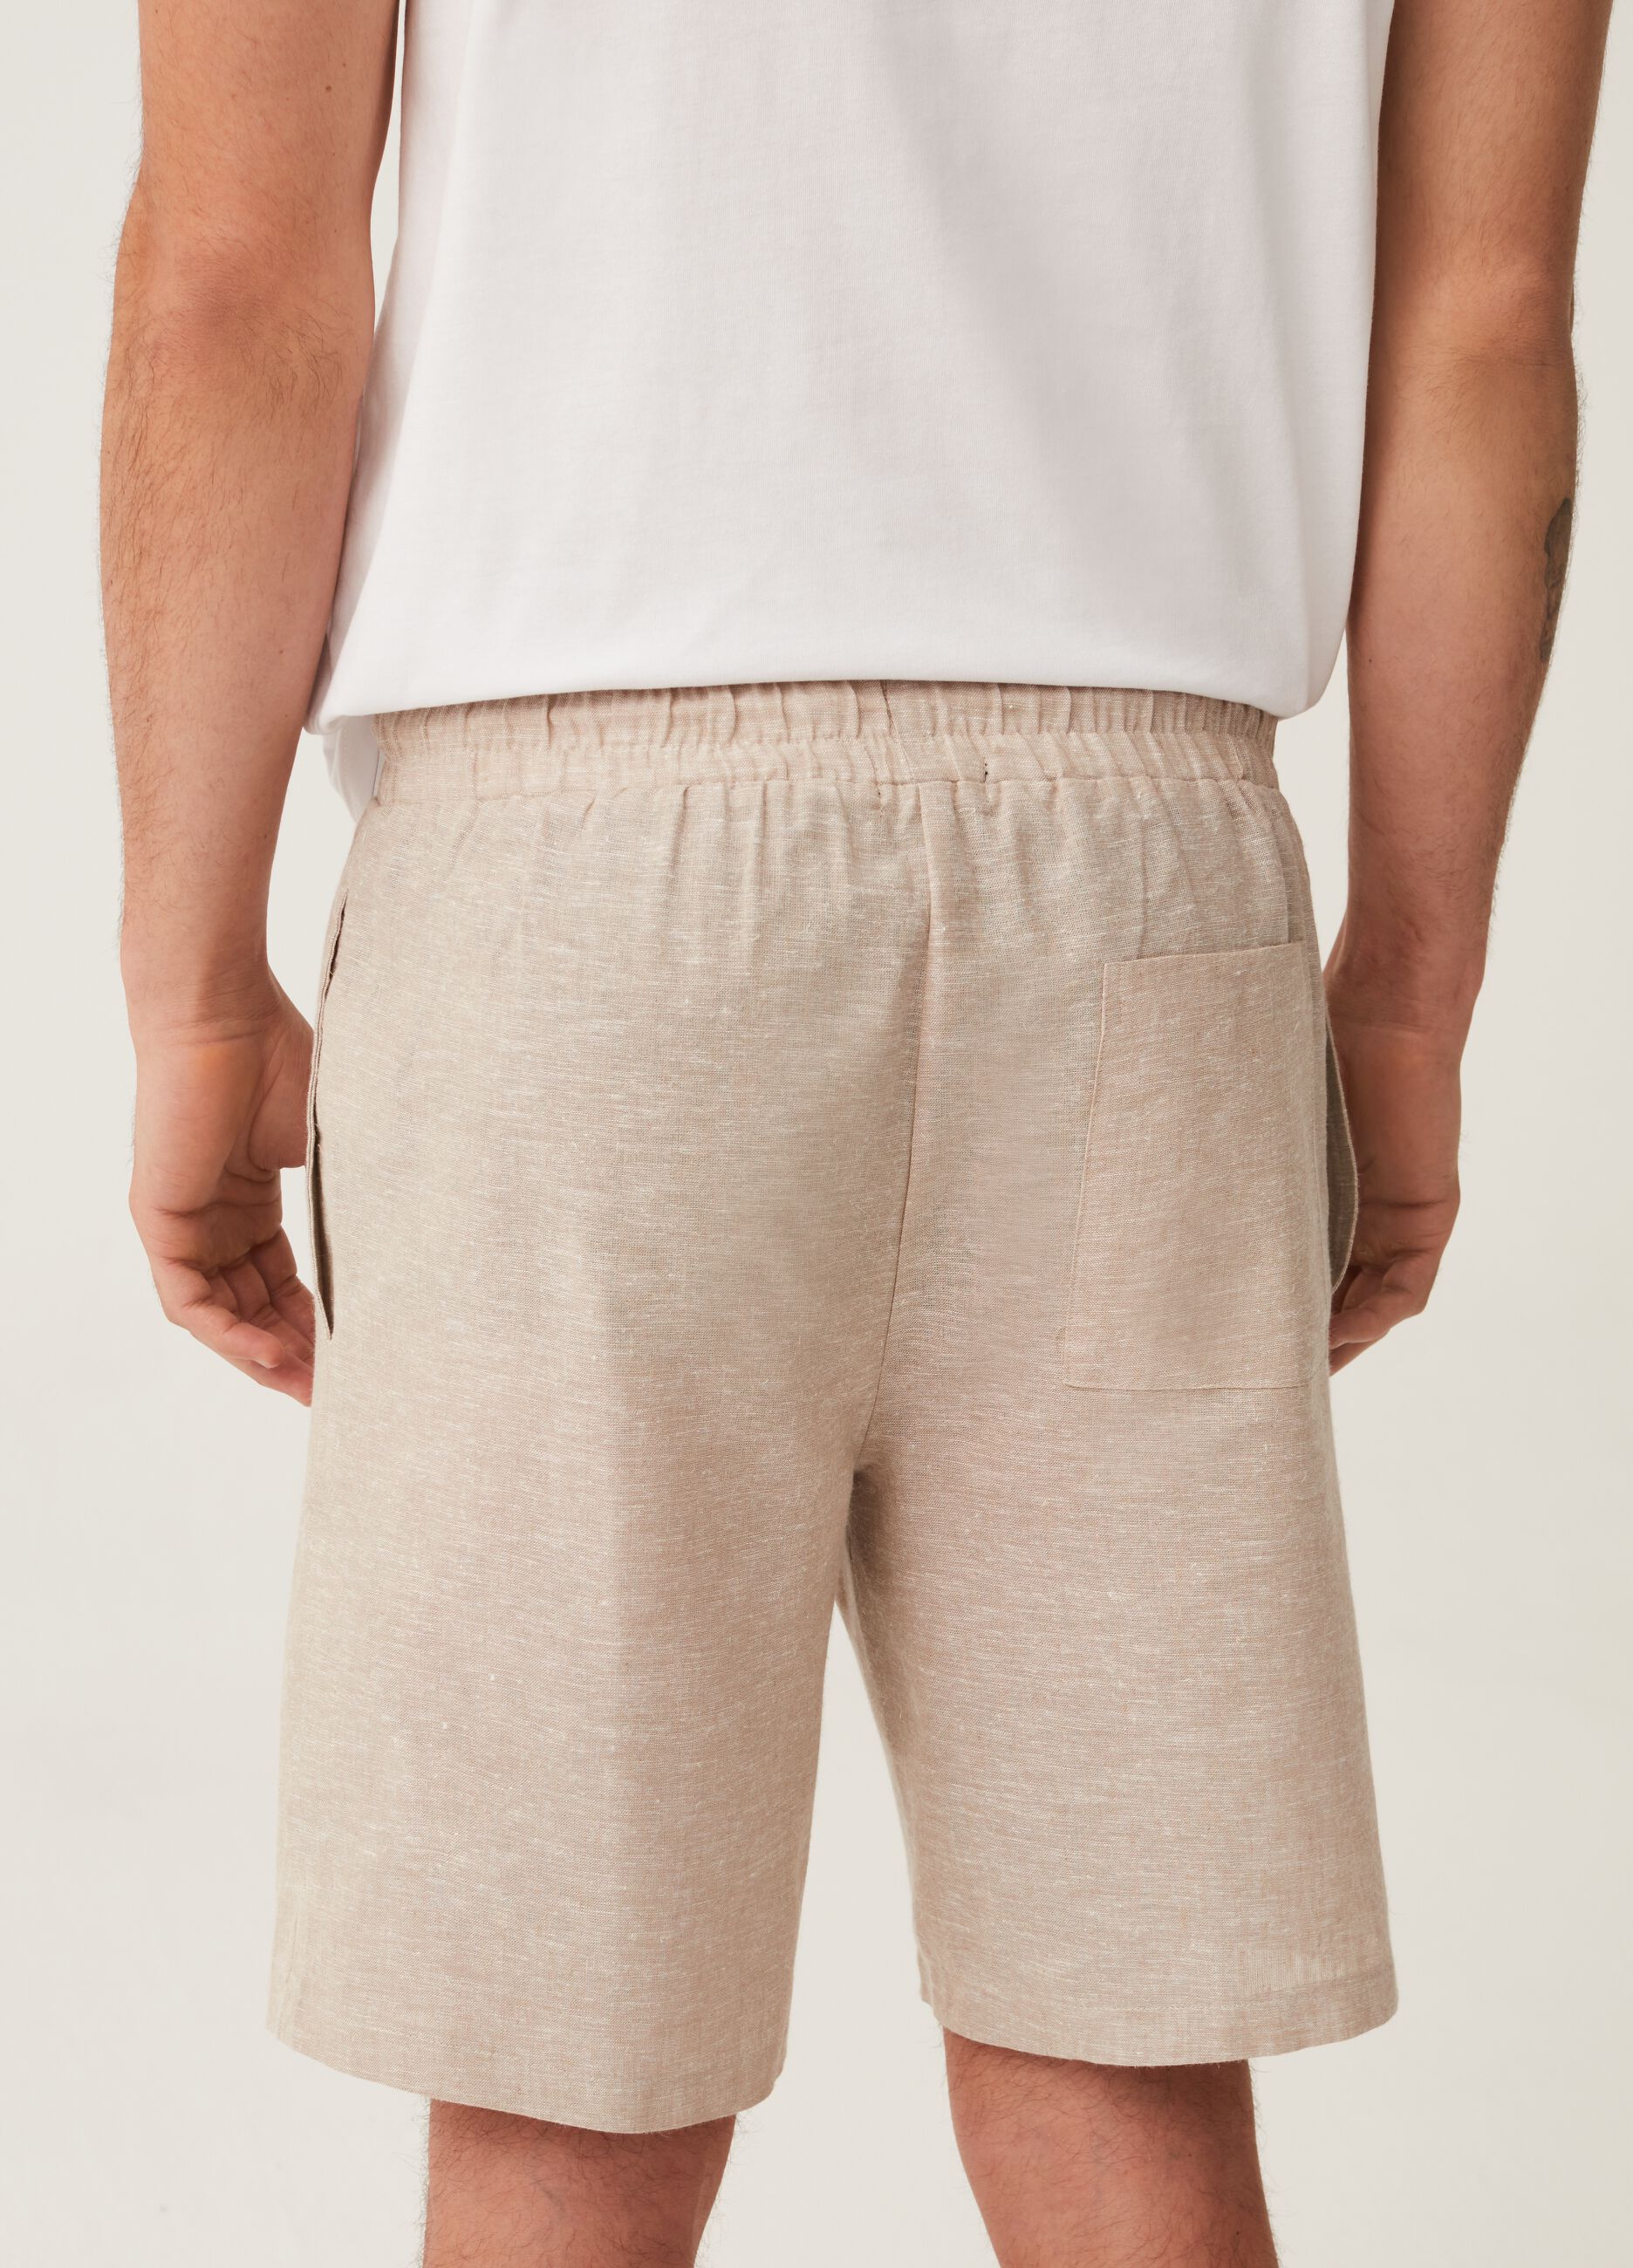 Short pyjama bottoms in linen and cotton_2